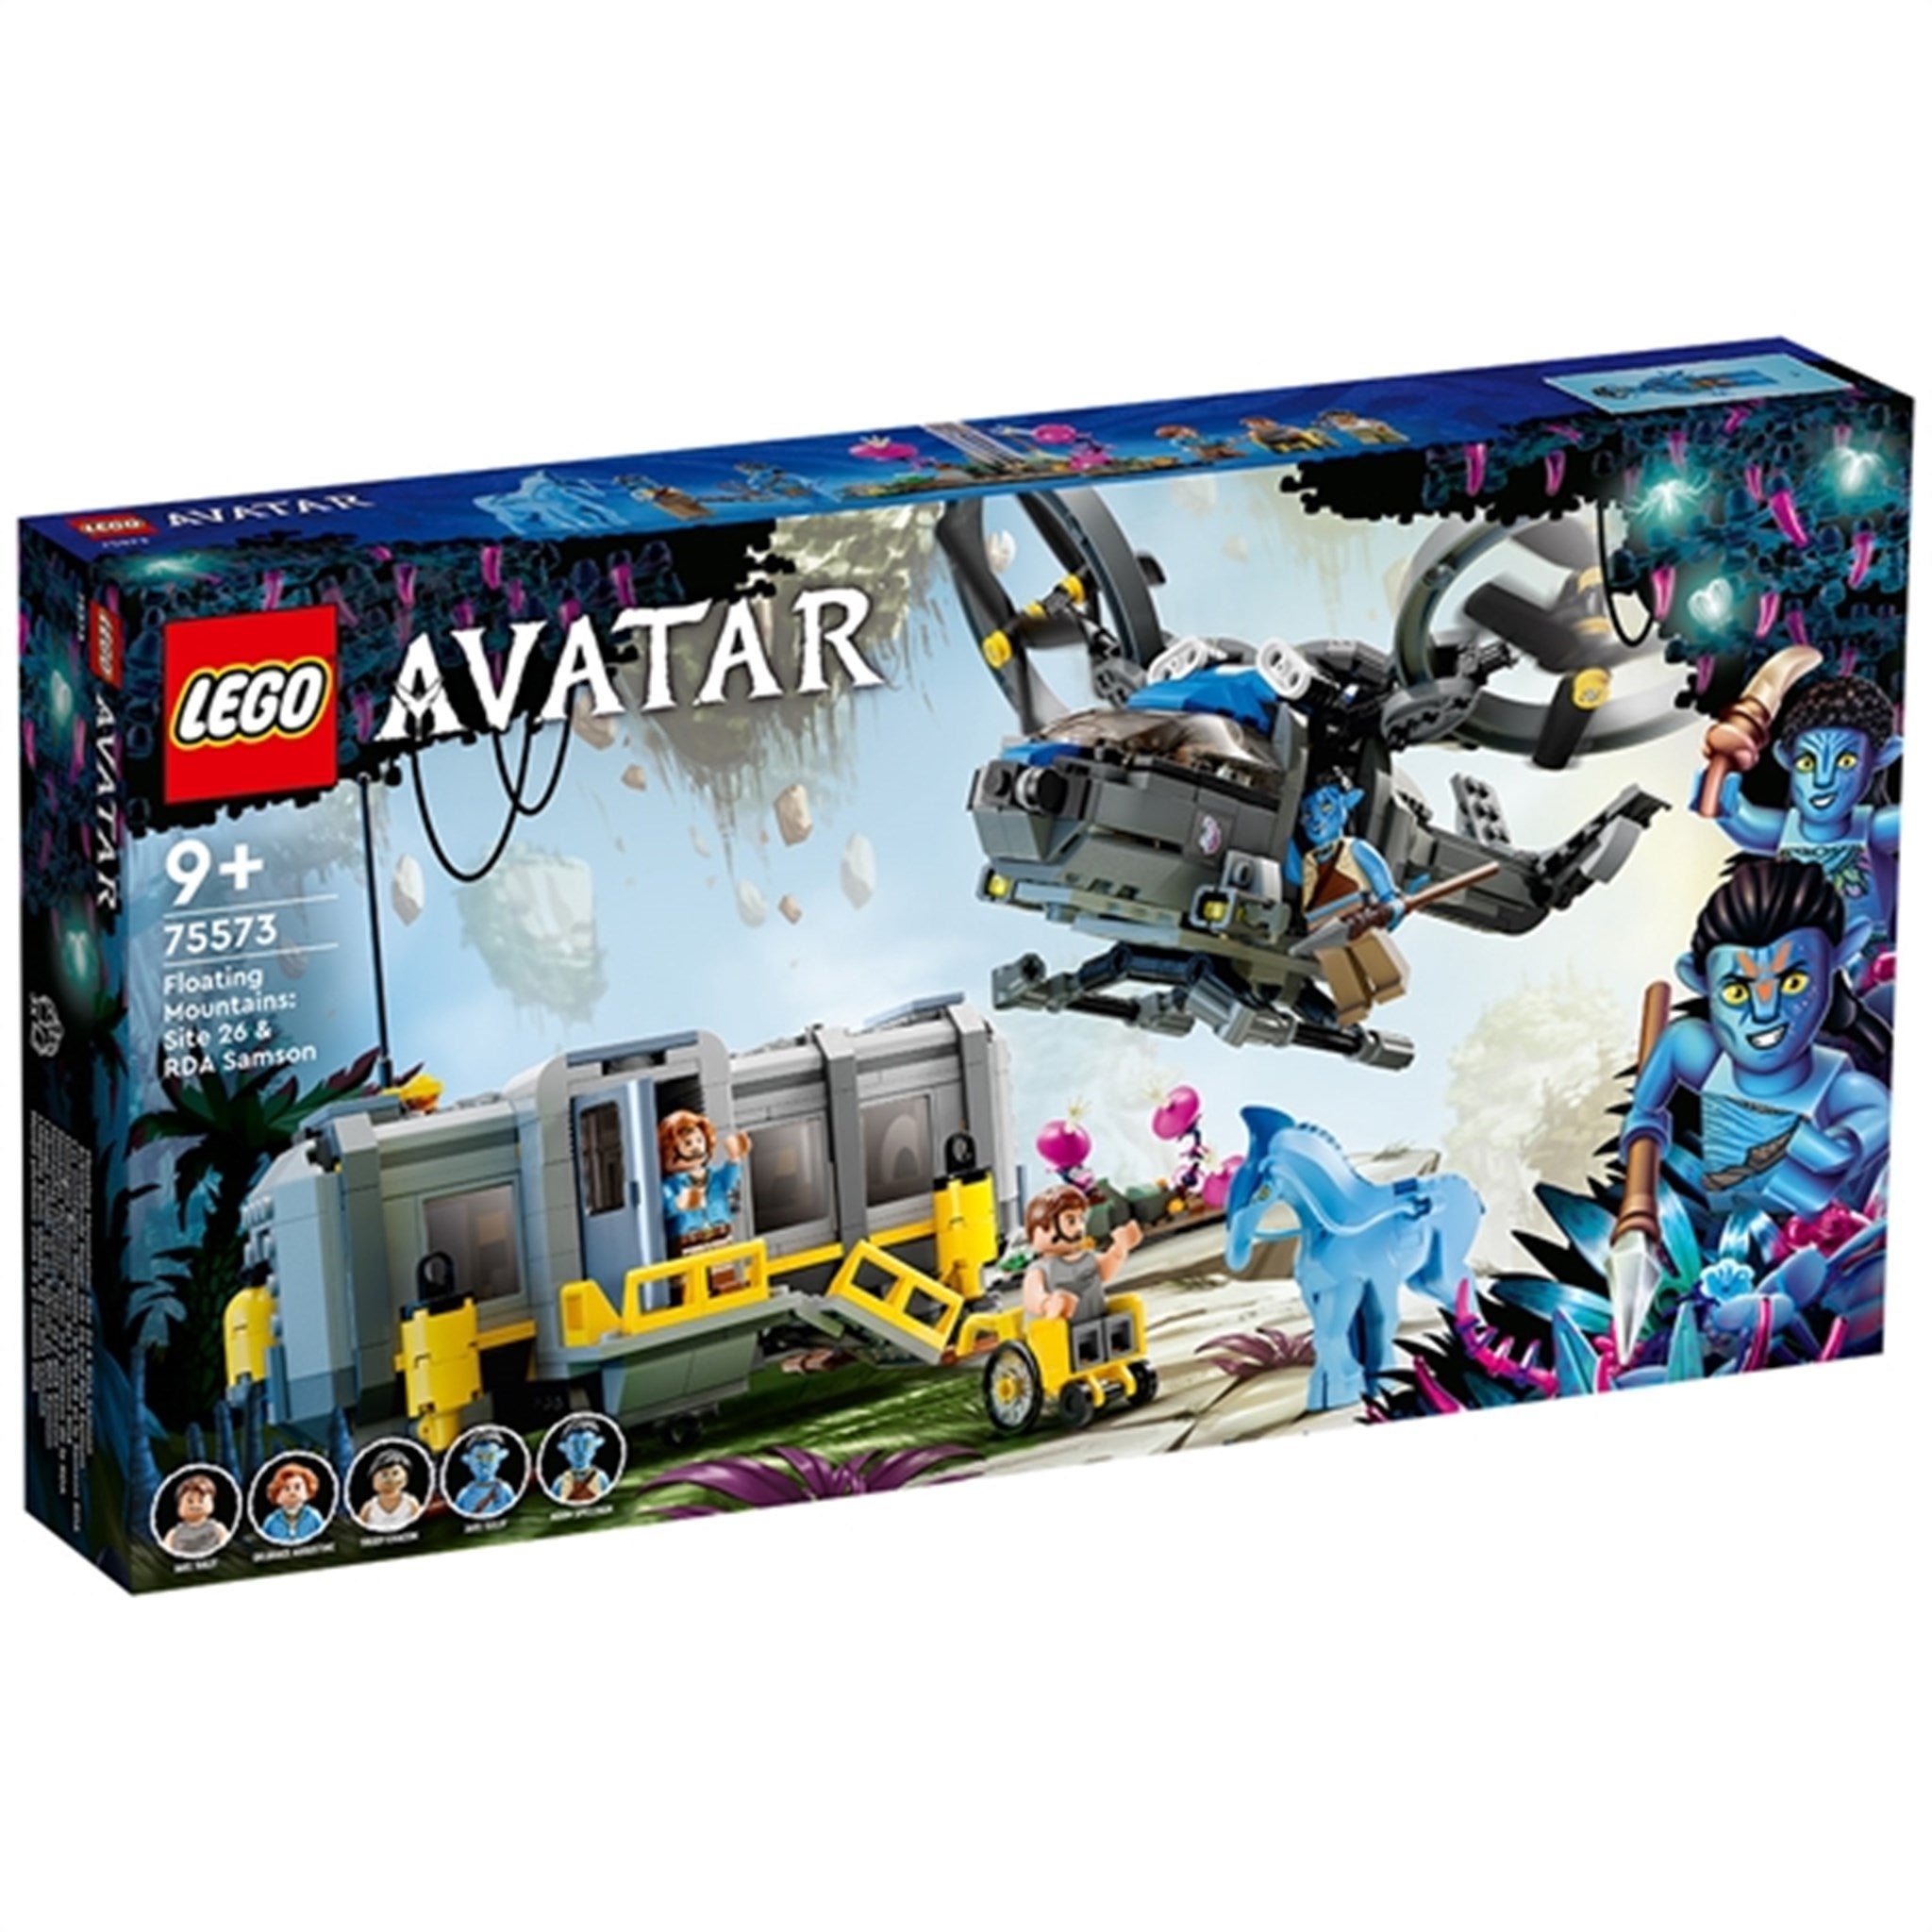 LEGO® Avatar Svævende Bjerge: Station 26 og RDA Samson